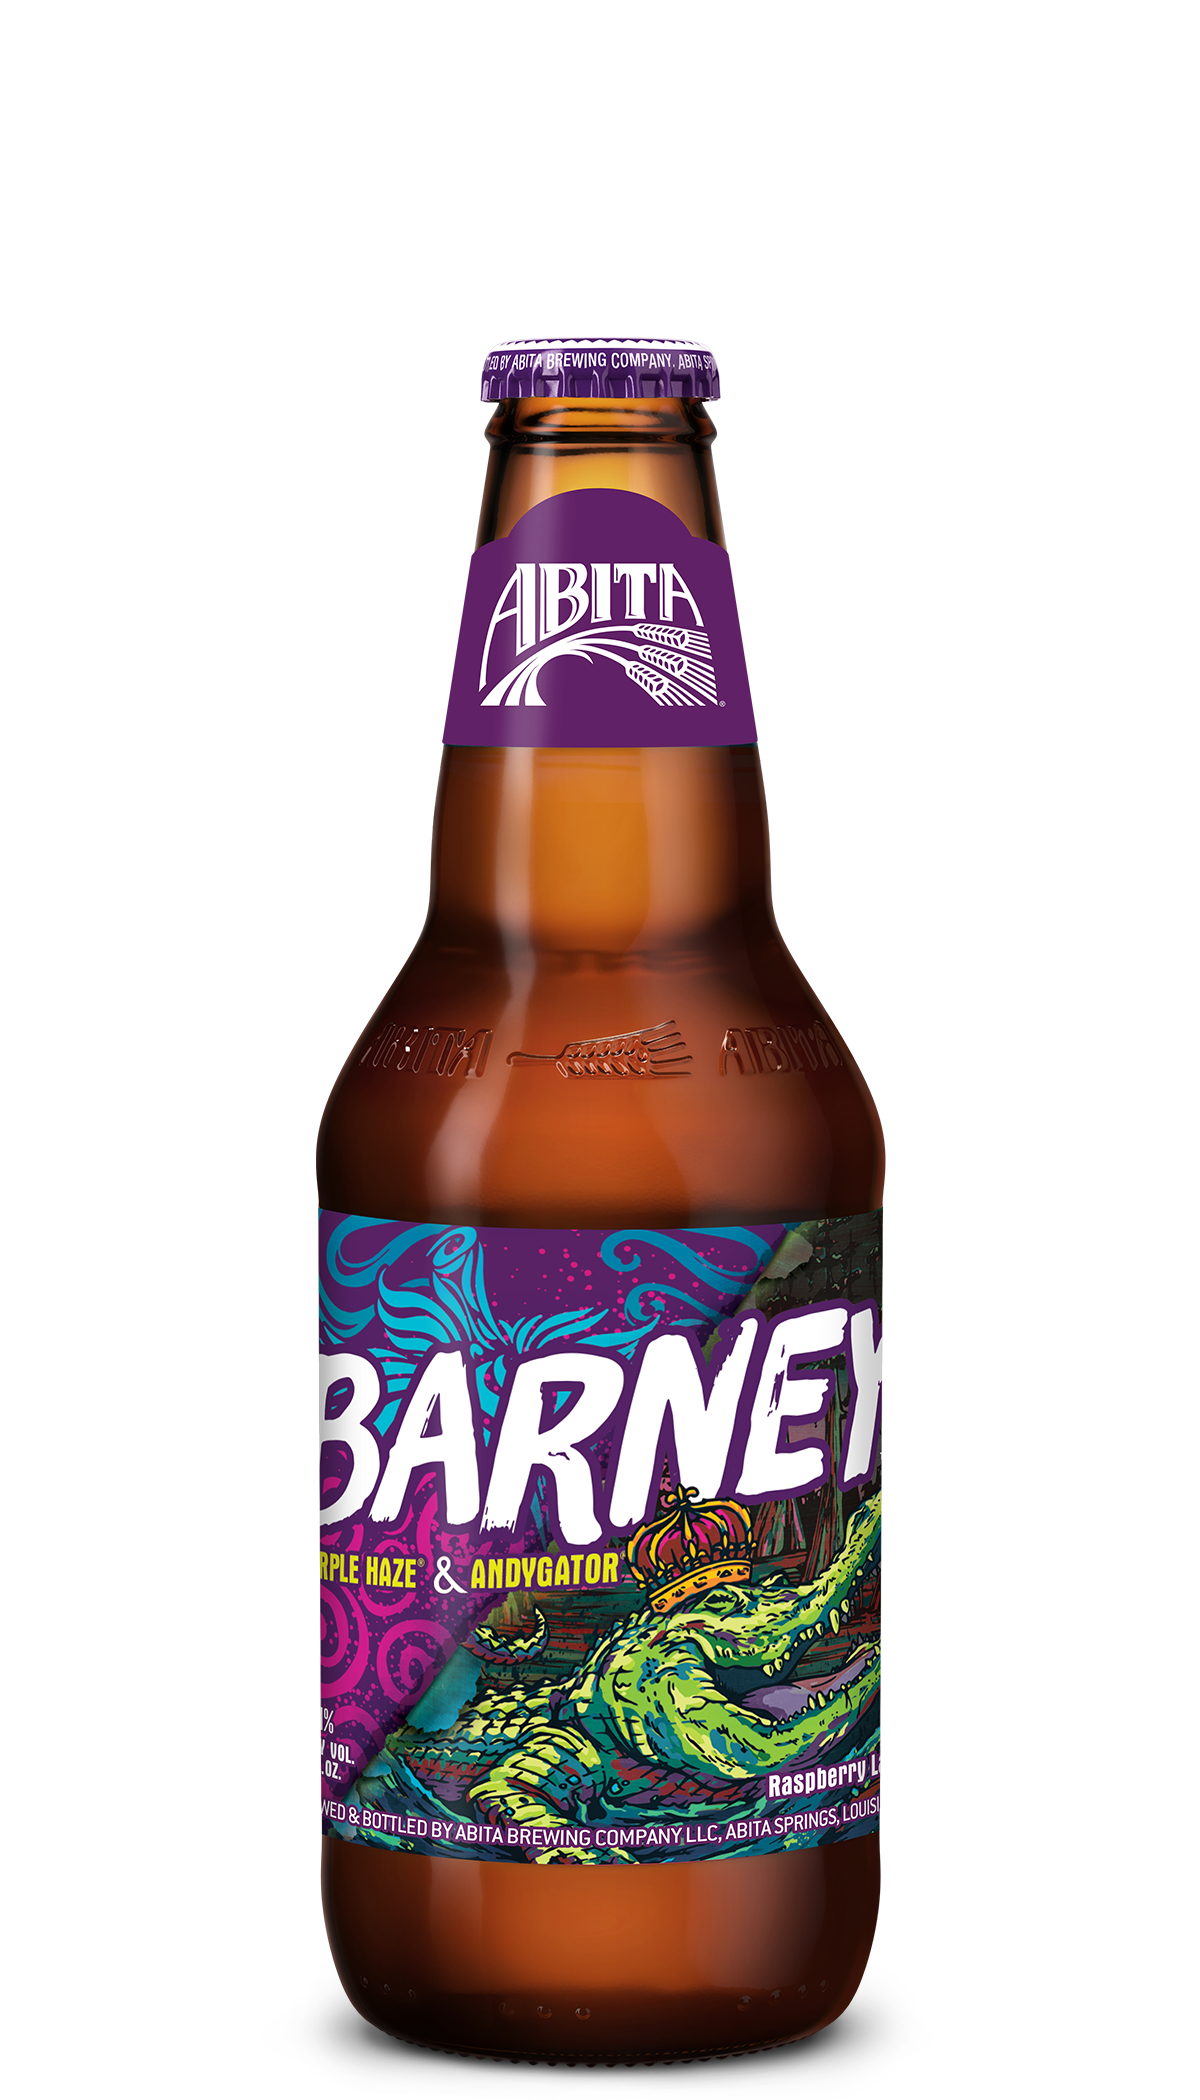 Barney beer Bottle